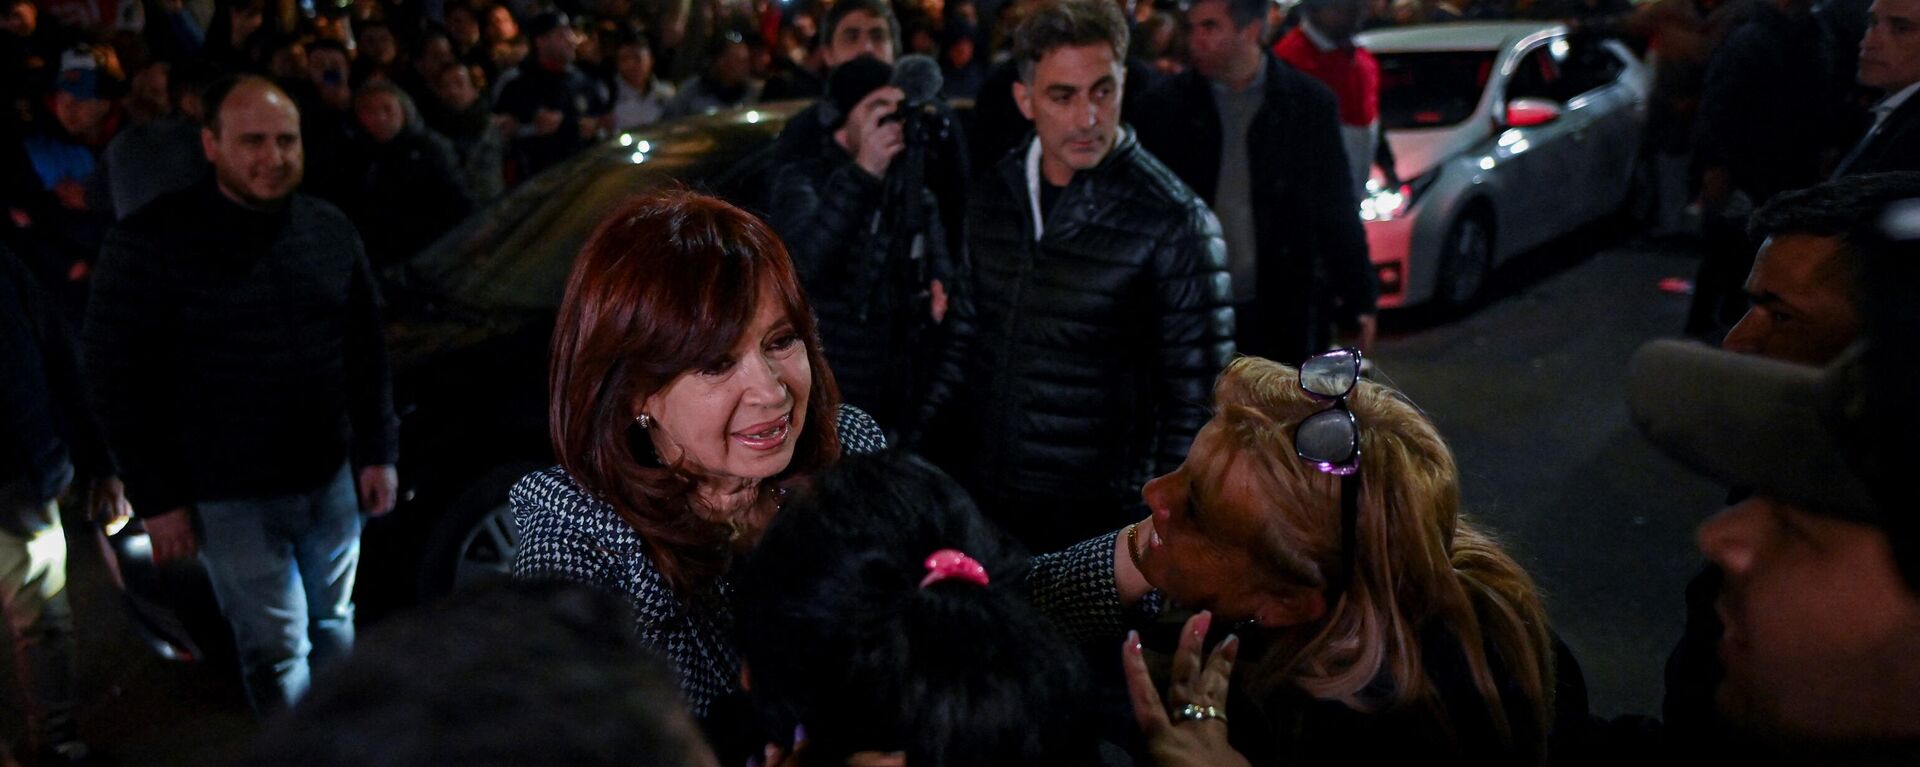 La vicepresidenta de la República, Cristina Fernández de Kirchner - Sputnik Mundo, 1920, 02.09.2022